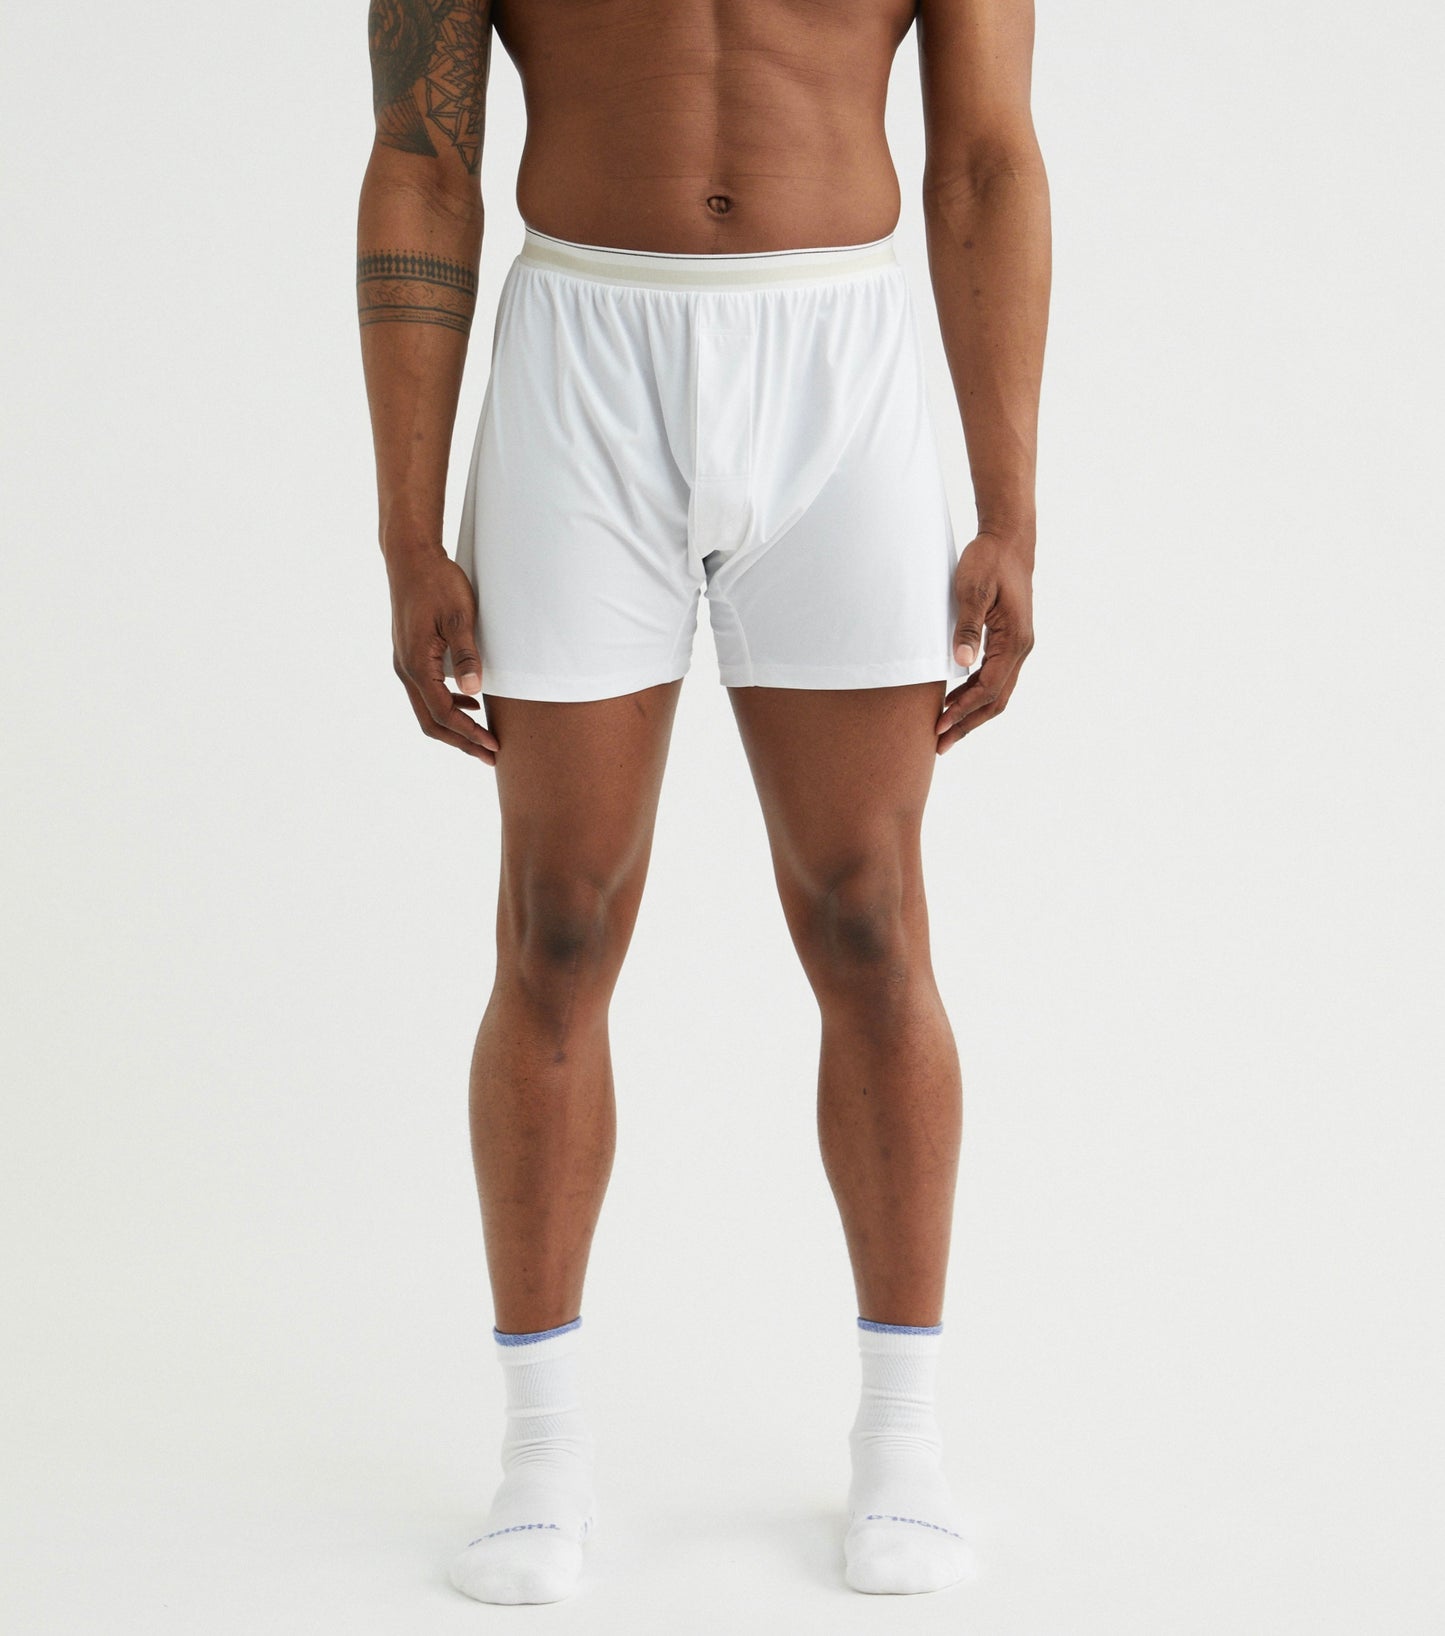 Mens Athletic Boxer Shorts